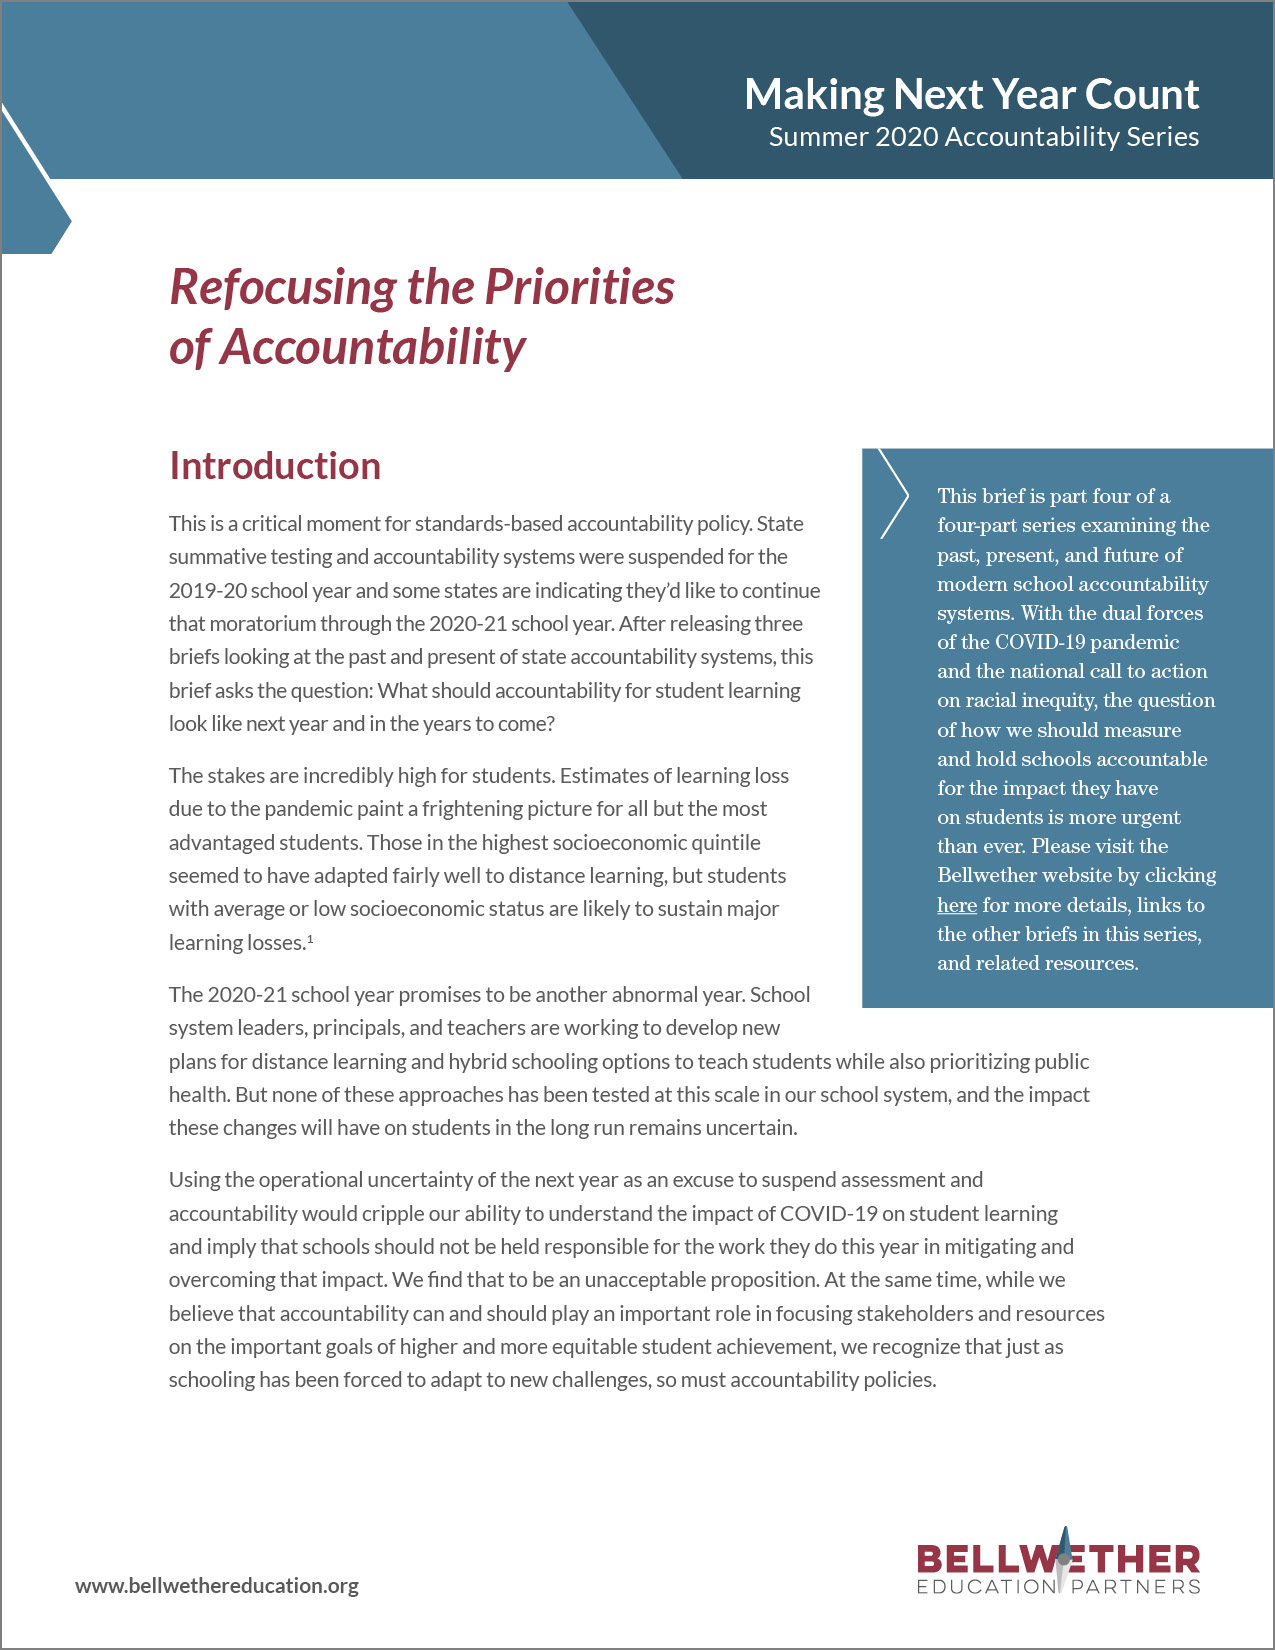 Refocusing the Priorities of Accountability Report